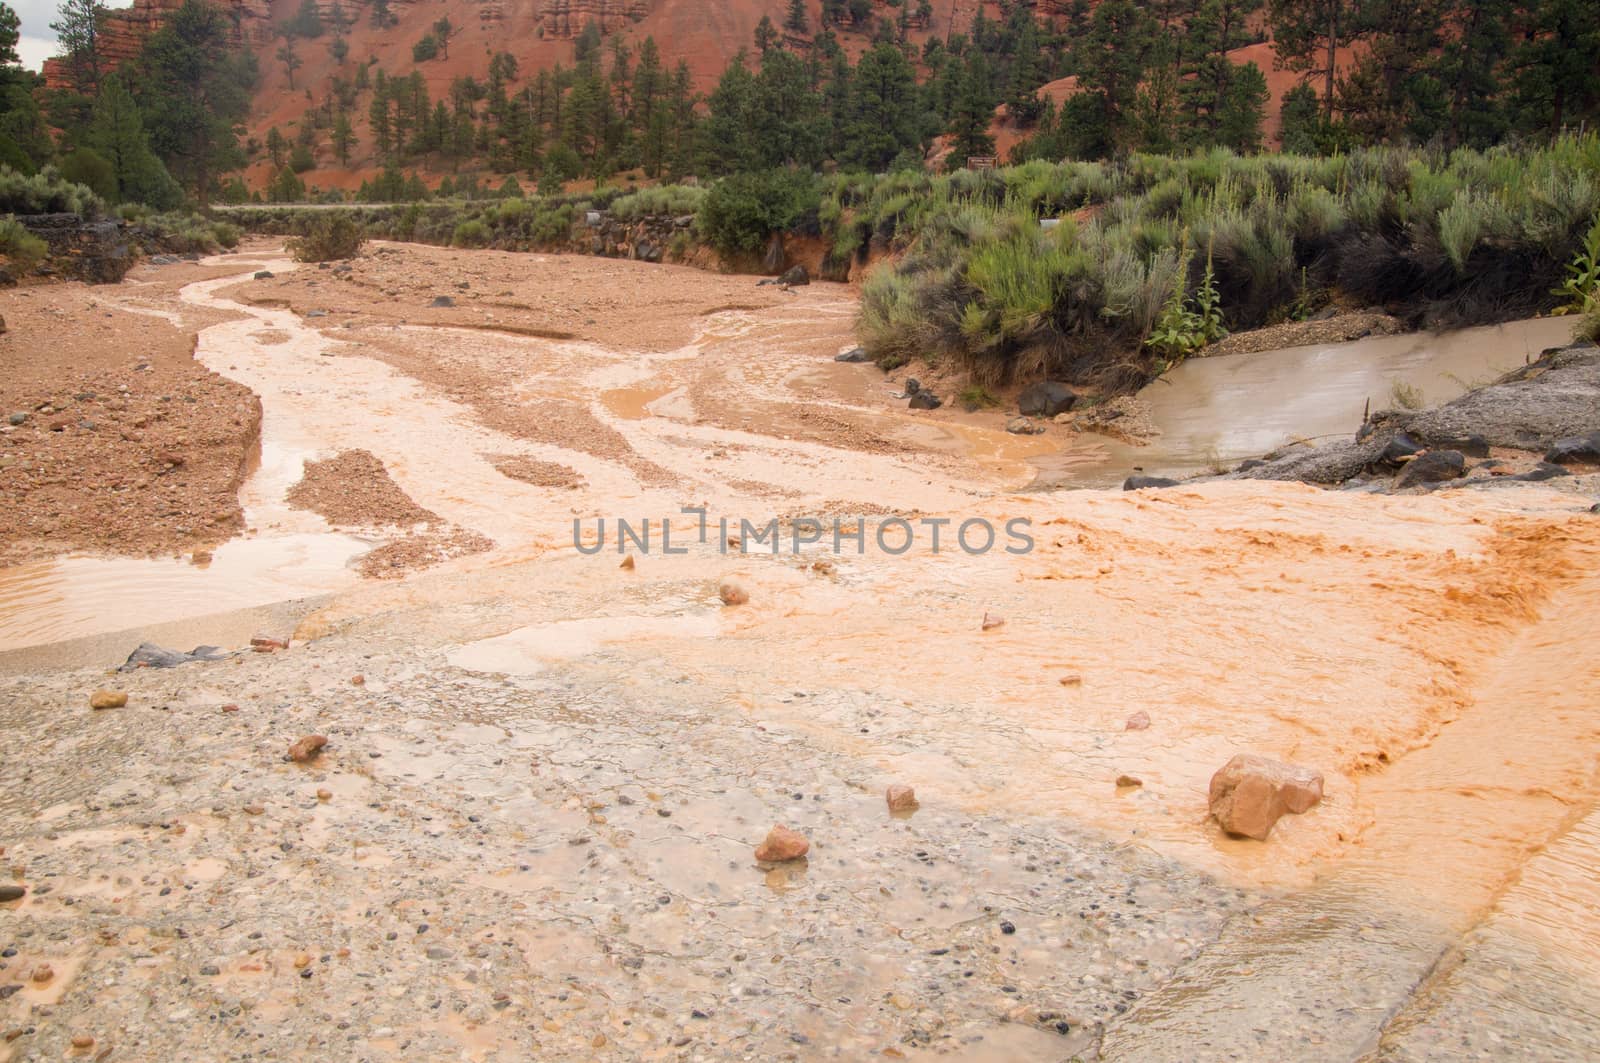 Muddy water from flash flood in Utah desert by emattil